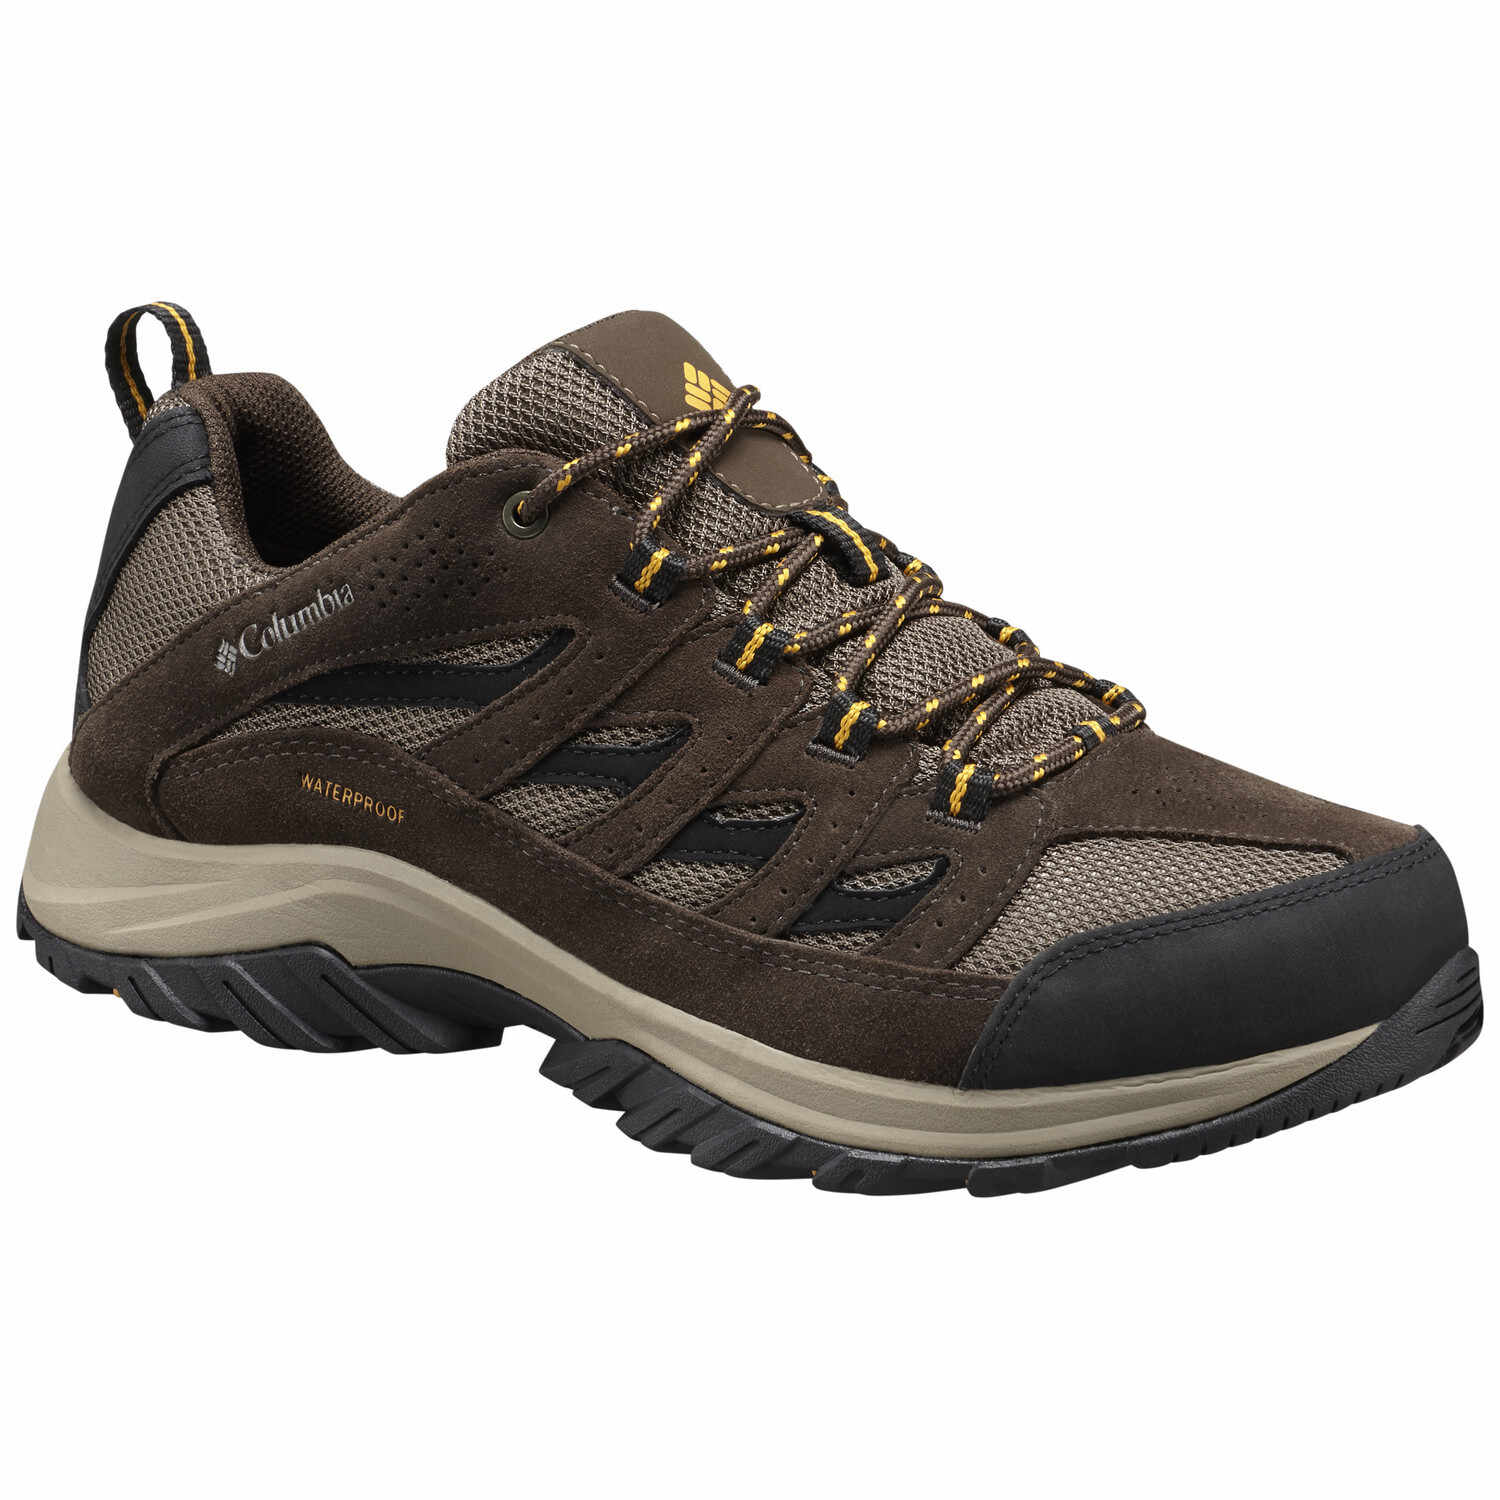 Pantofi Columbia Crestwood Waterproof Maro - Mud